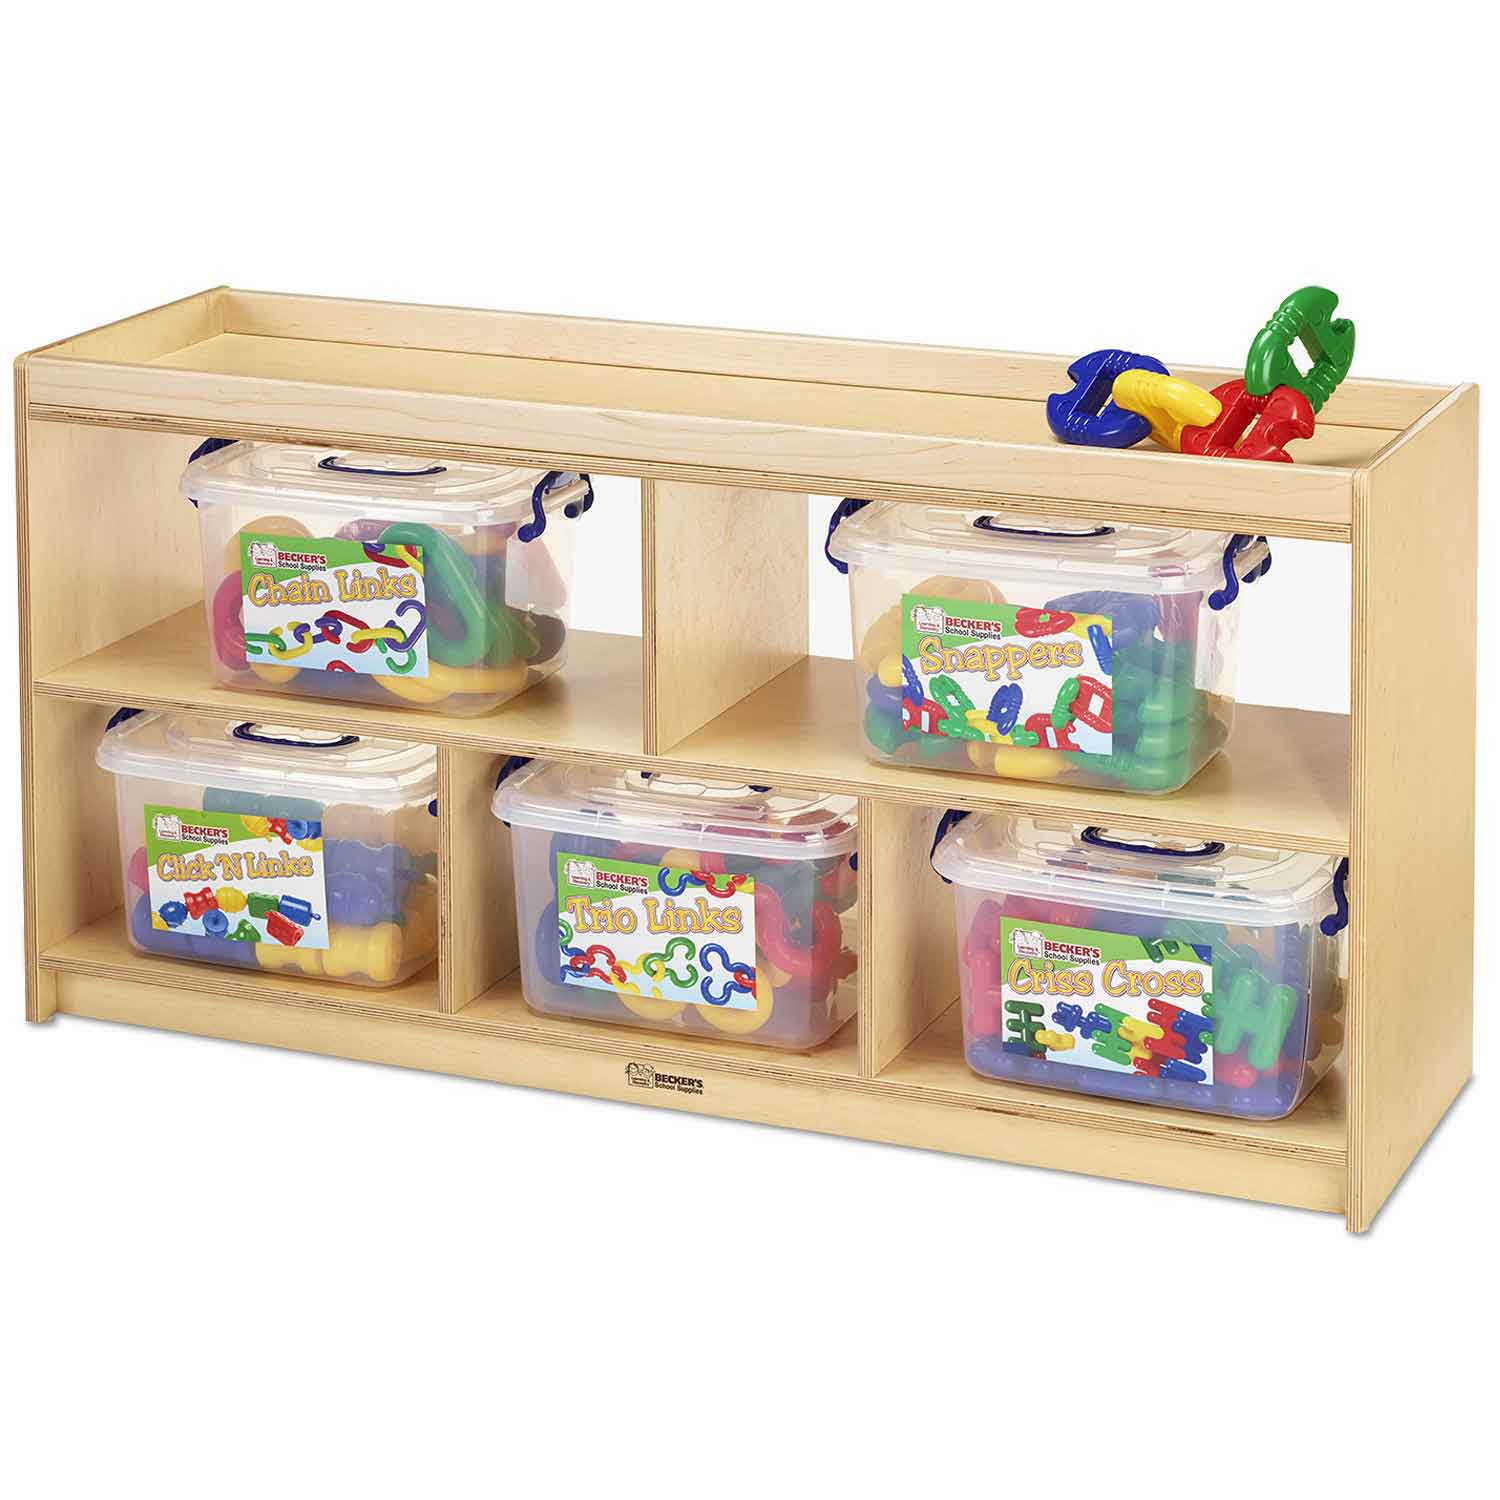 Classroom Wood Sorting Box for Kids